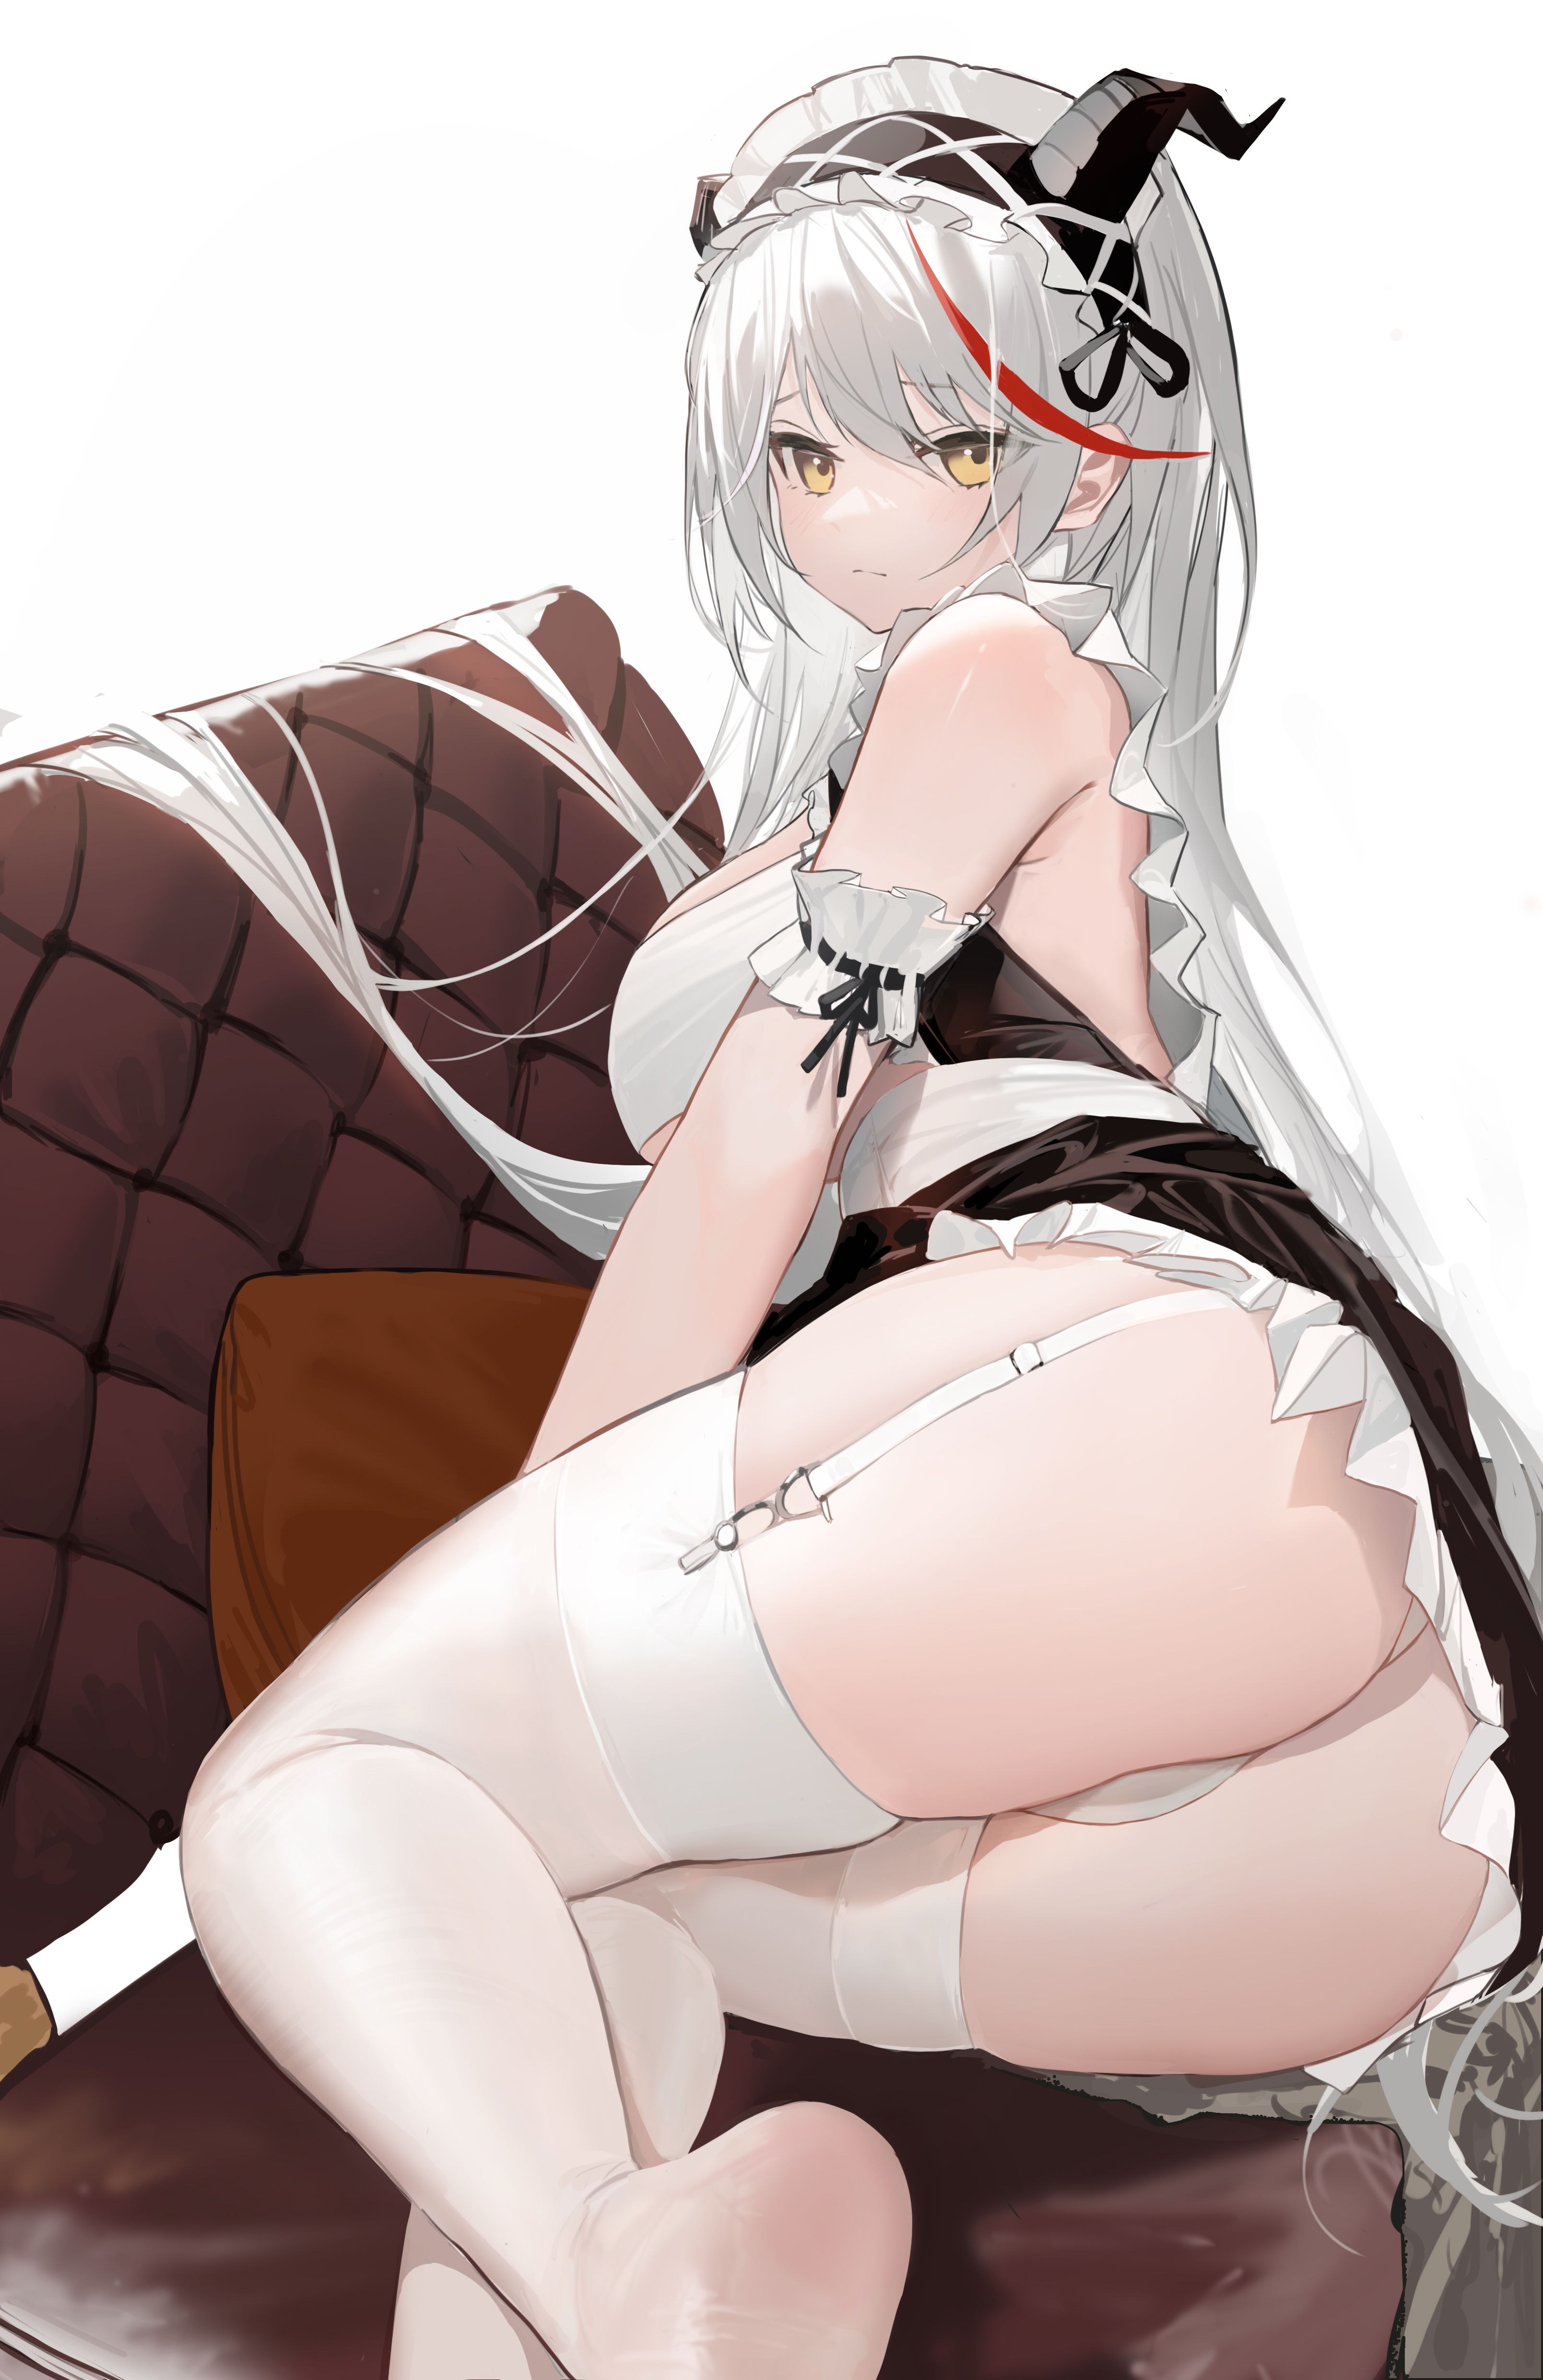 Anime 3217x4961 Azur Lane Ägir (Azur Lane) anime girls ass white hair horns upskirt stockings garter belt panties maid maid outfit anime